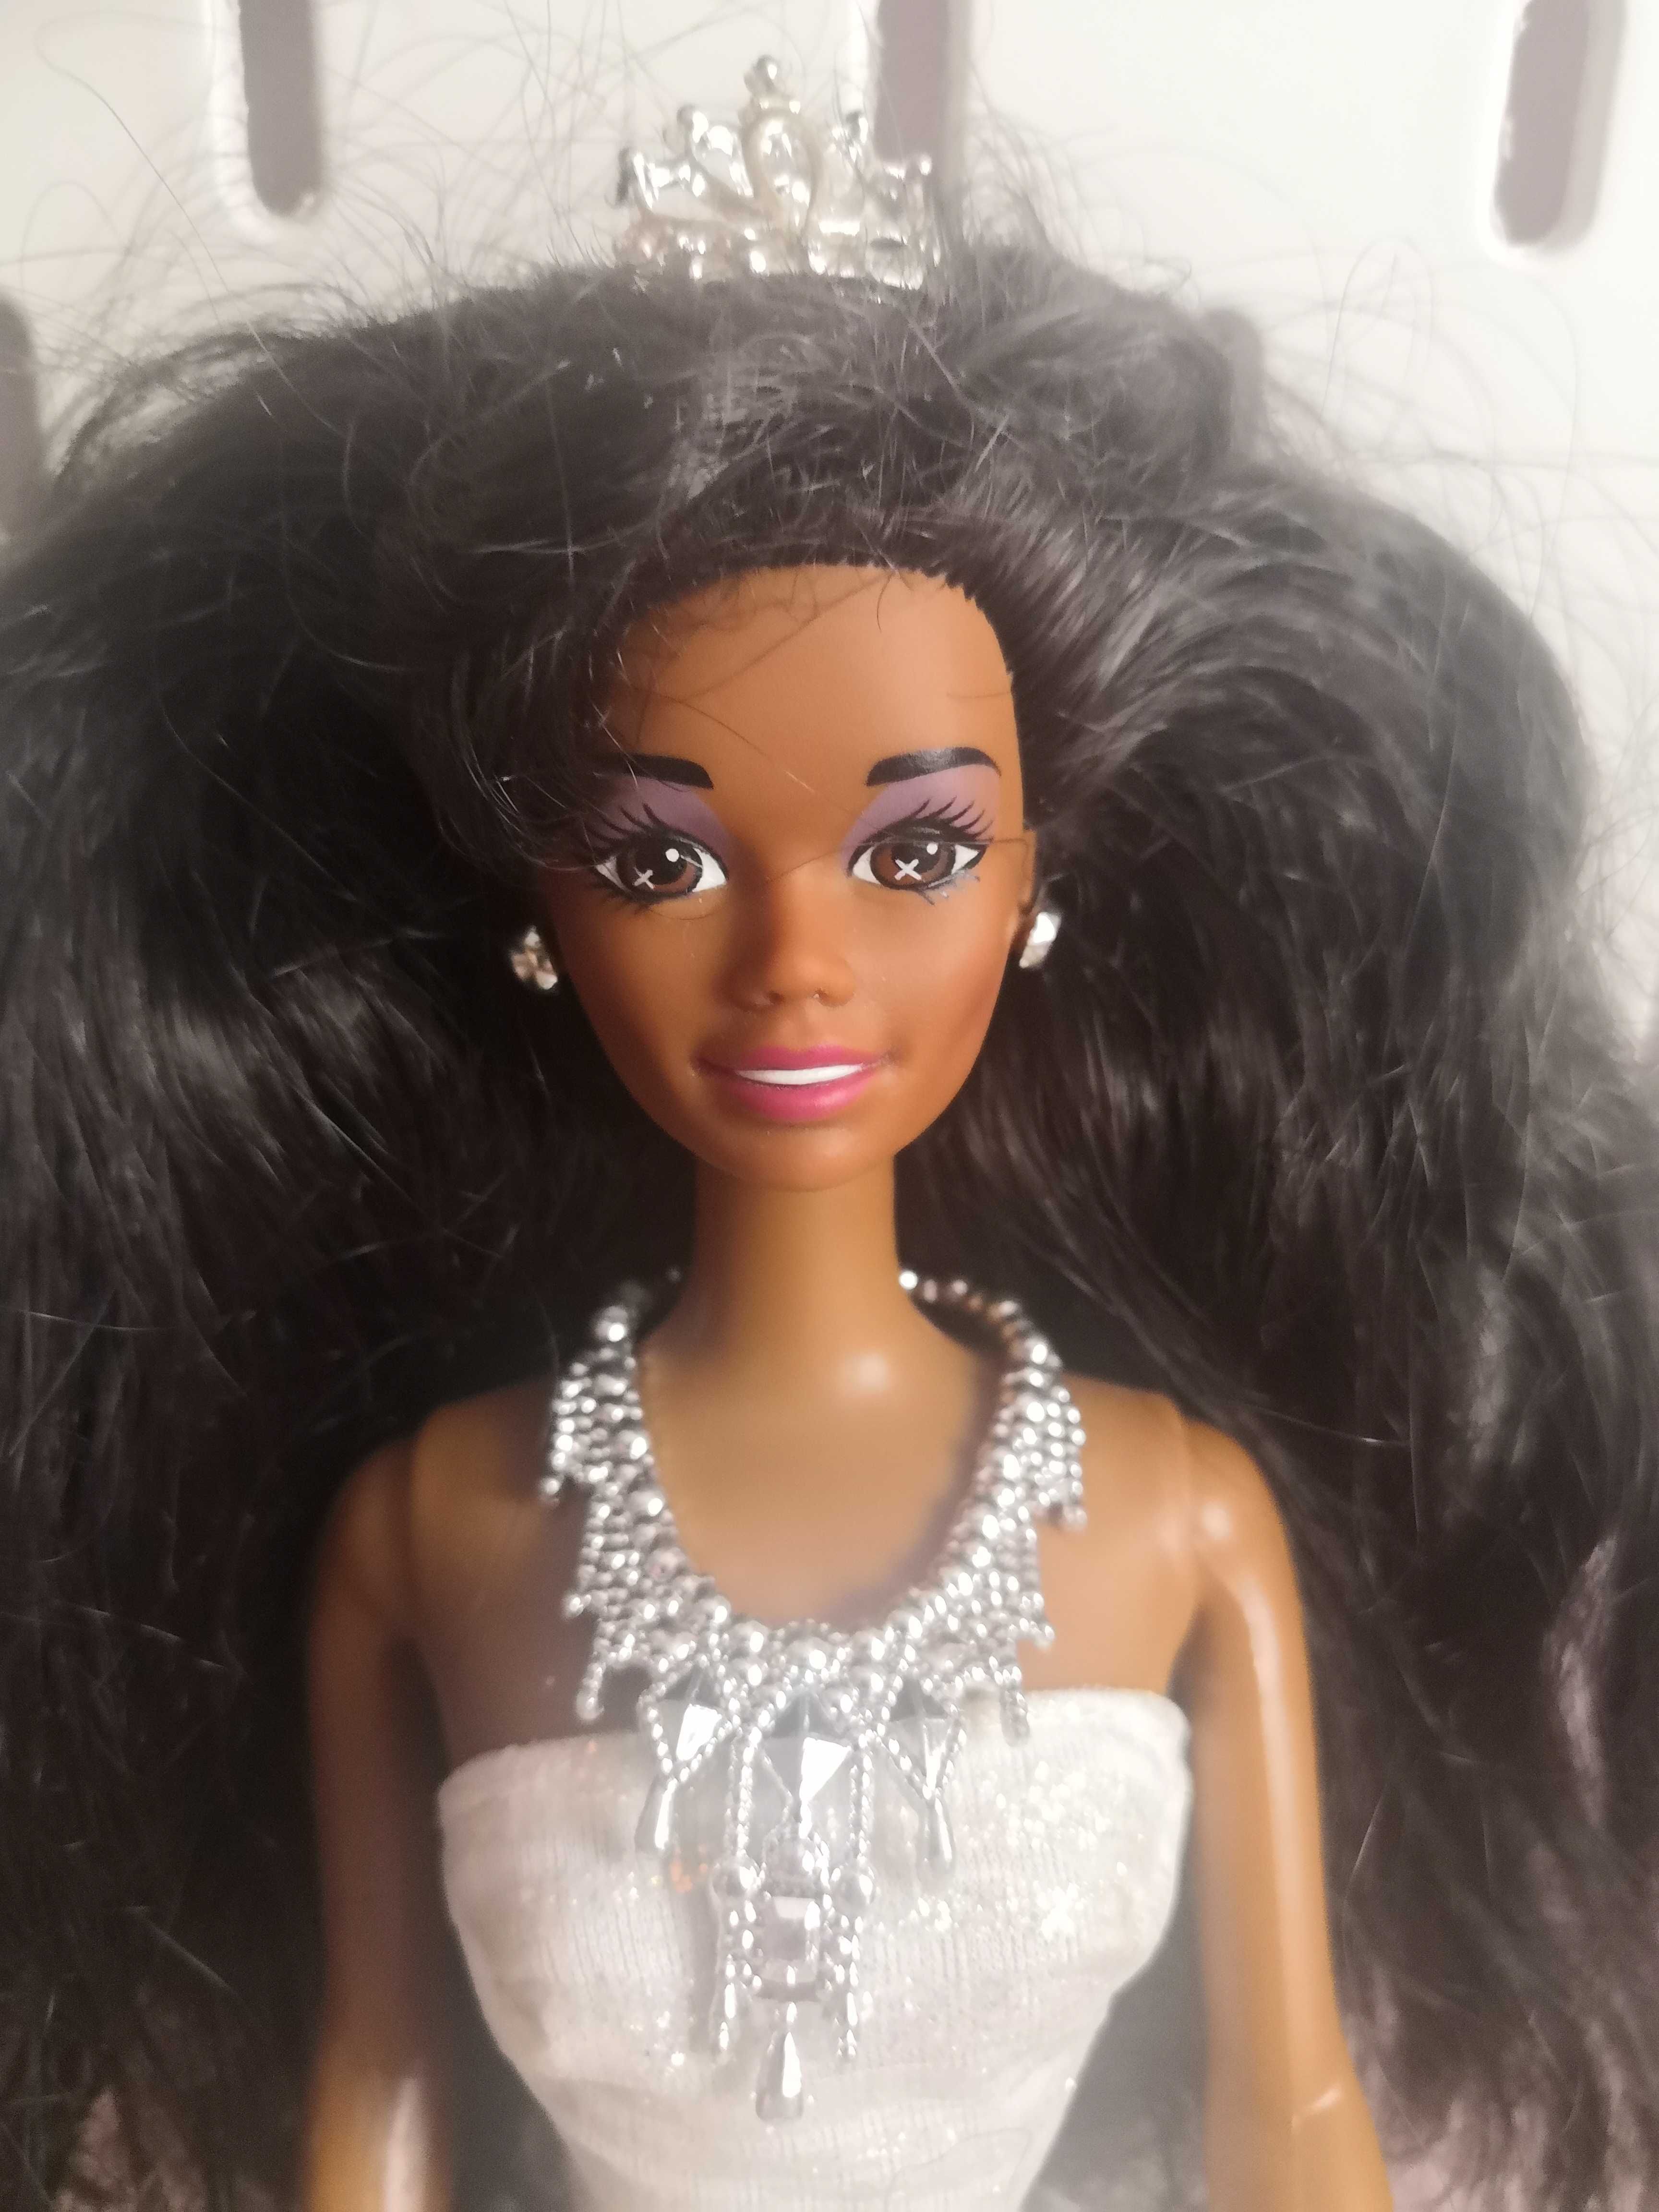 Lalka Barbie ciemnoskóra